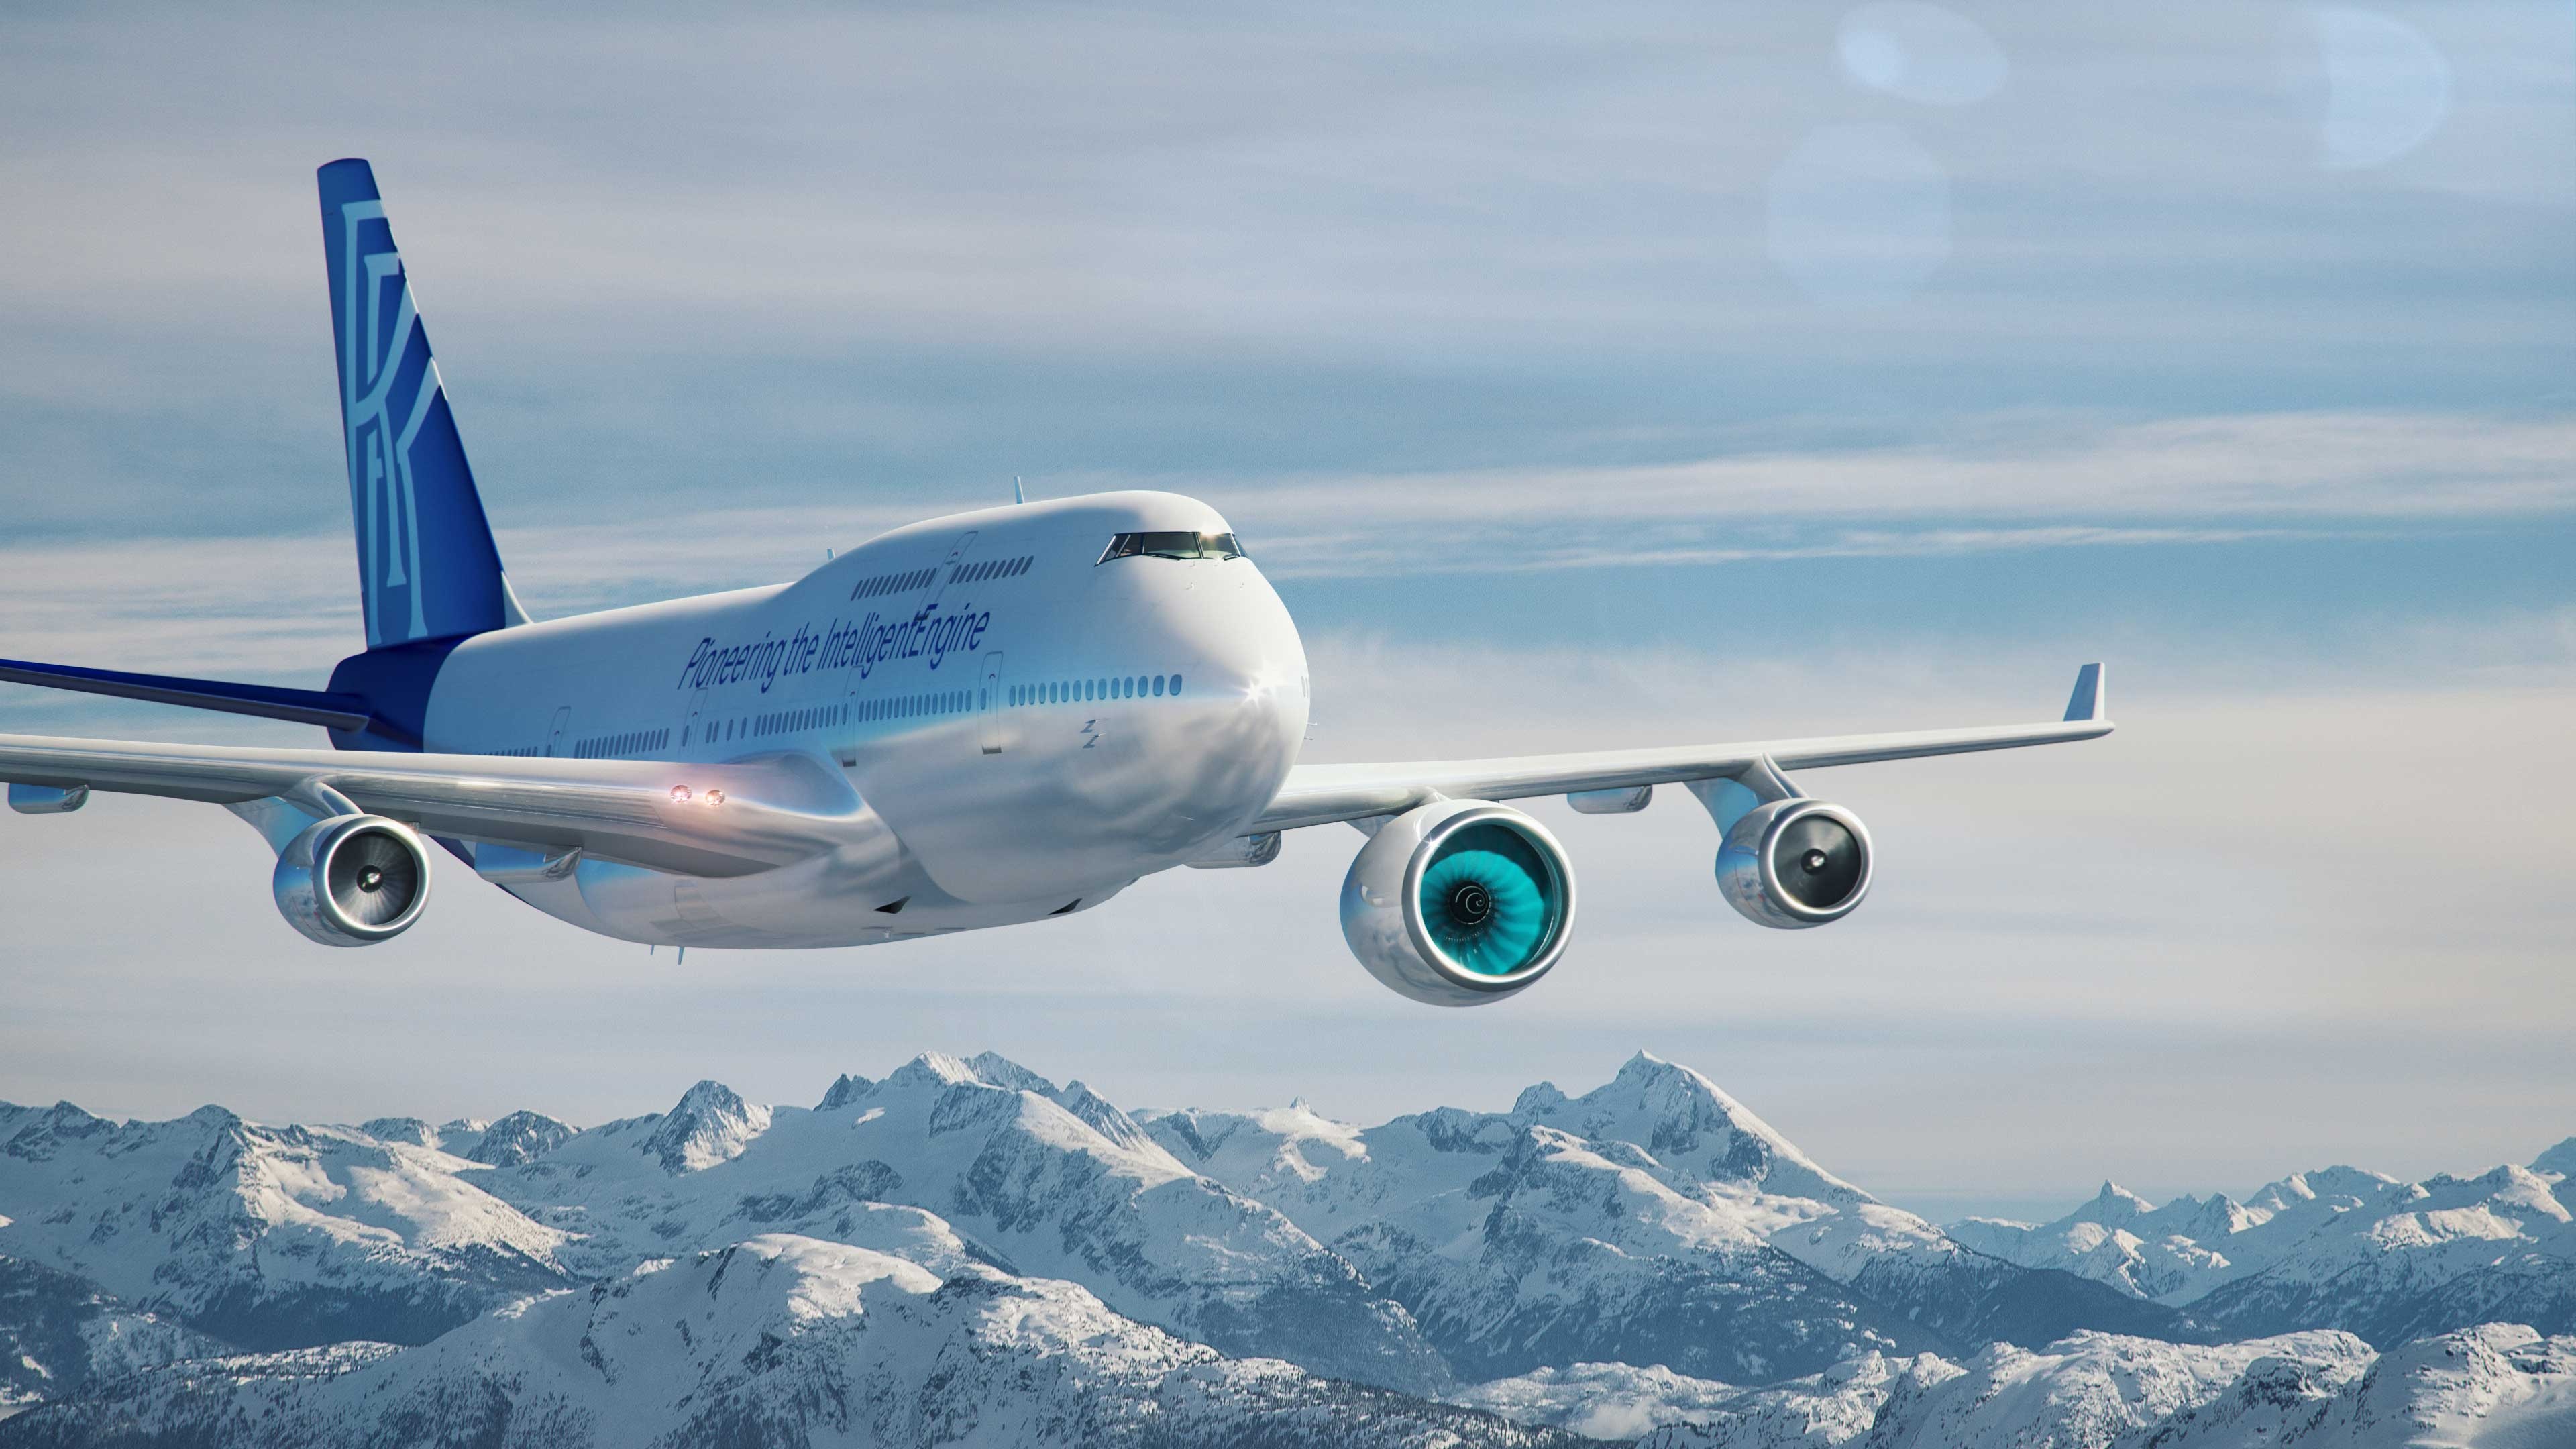 Boeing 747, Rolls Royce testbed, Revolutionary jet engine, CNN travel, 3840x2160 4K Desktop